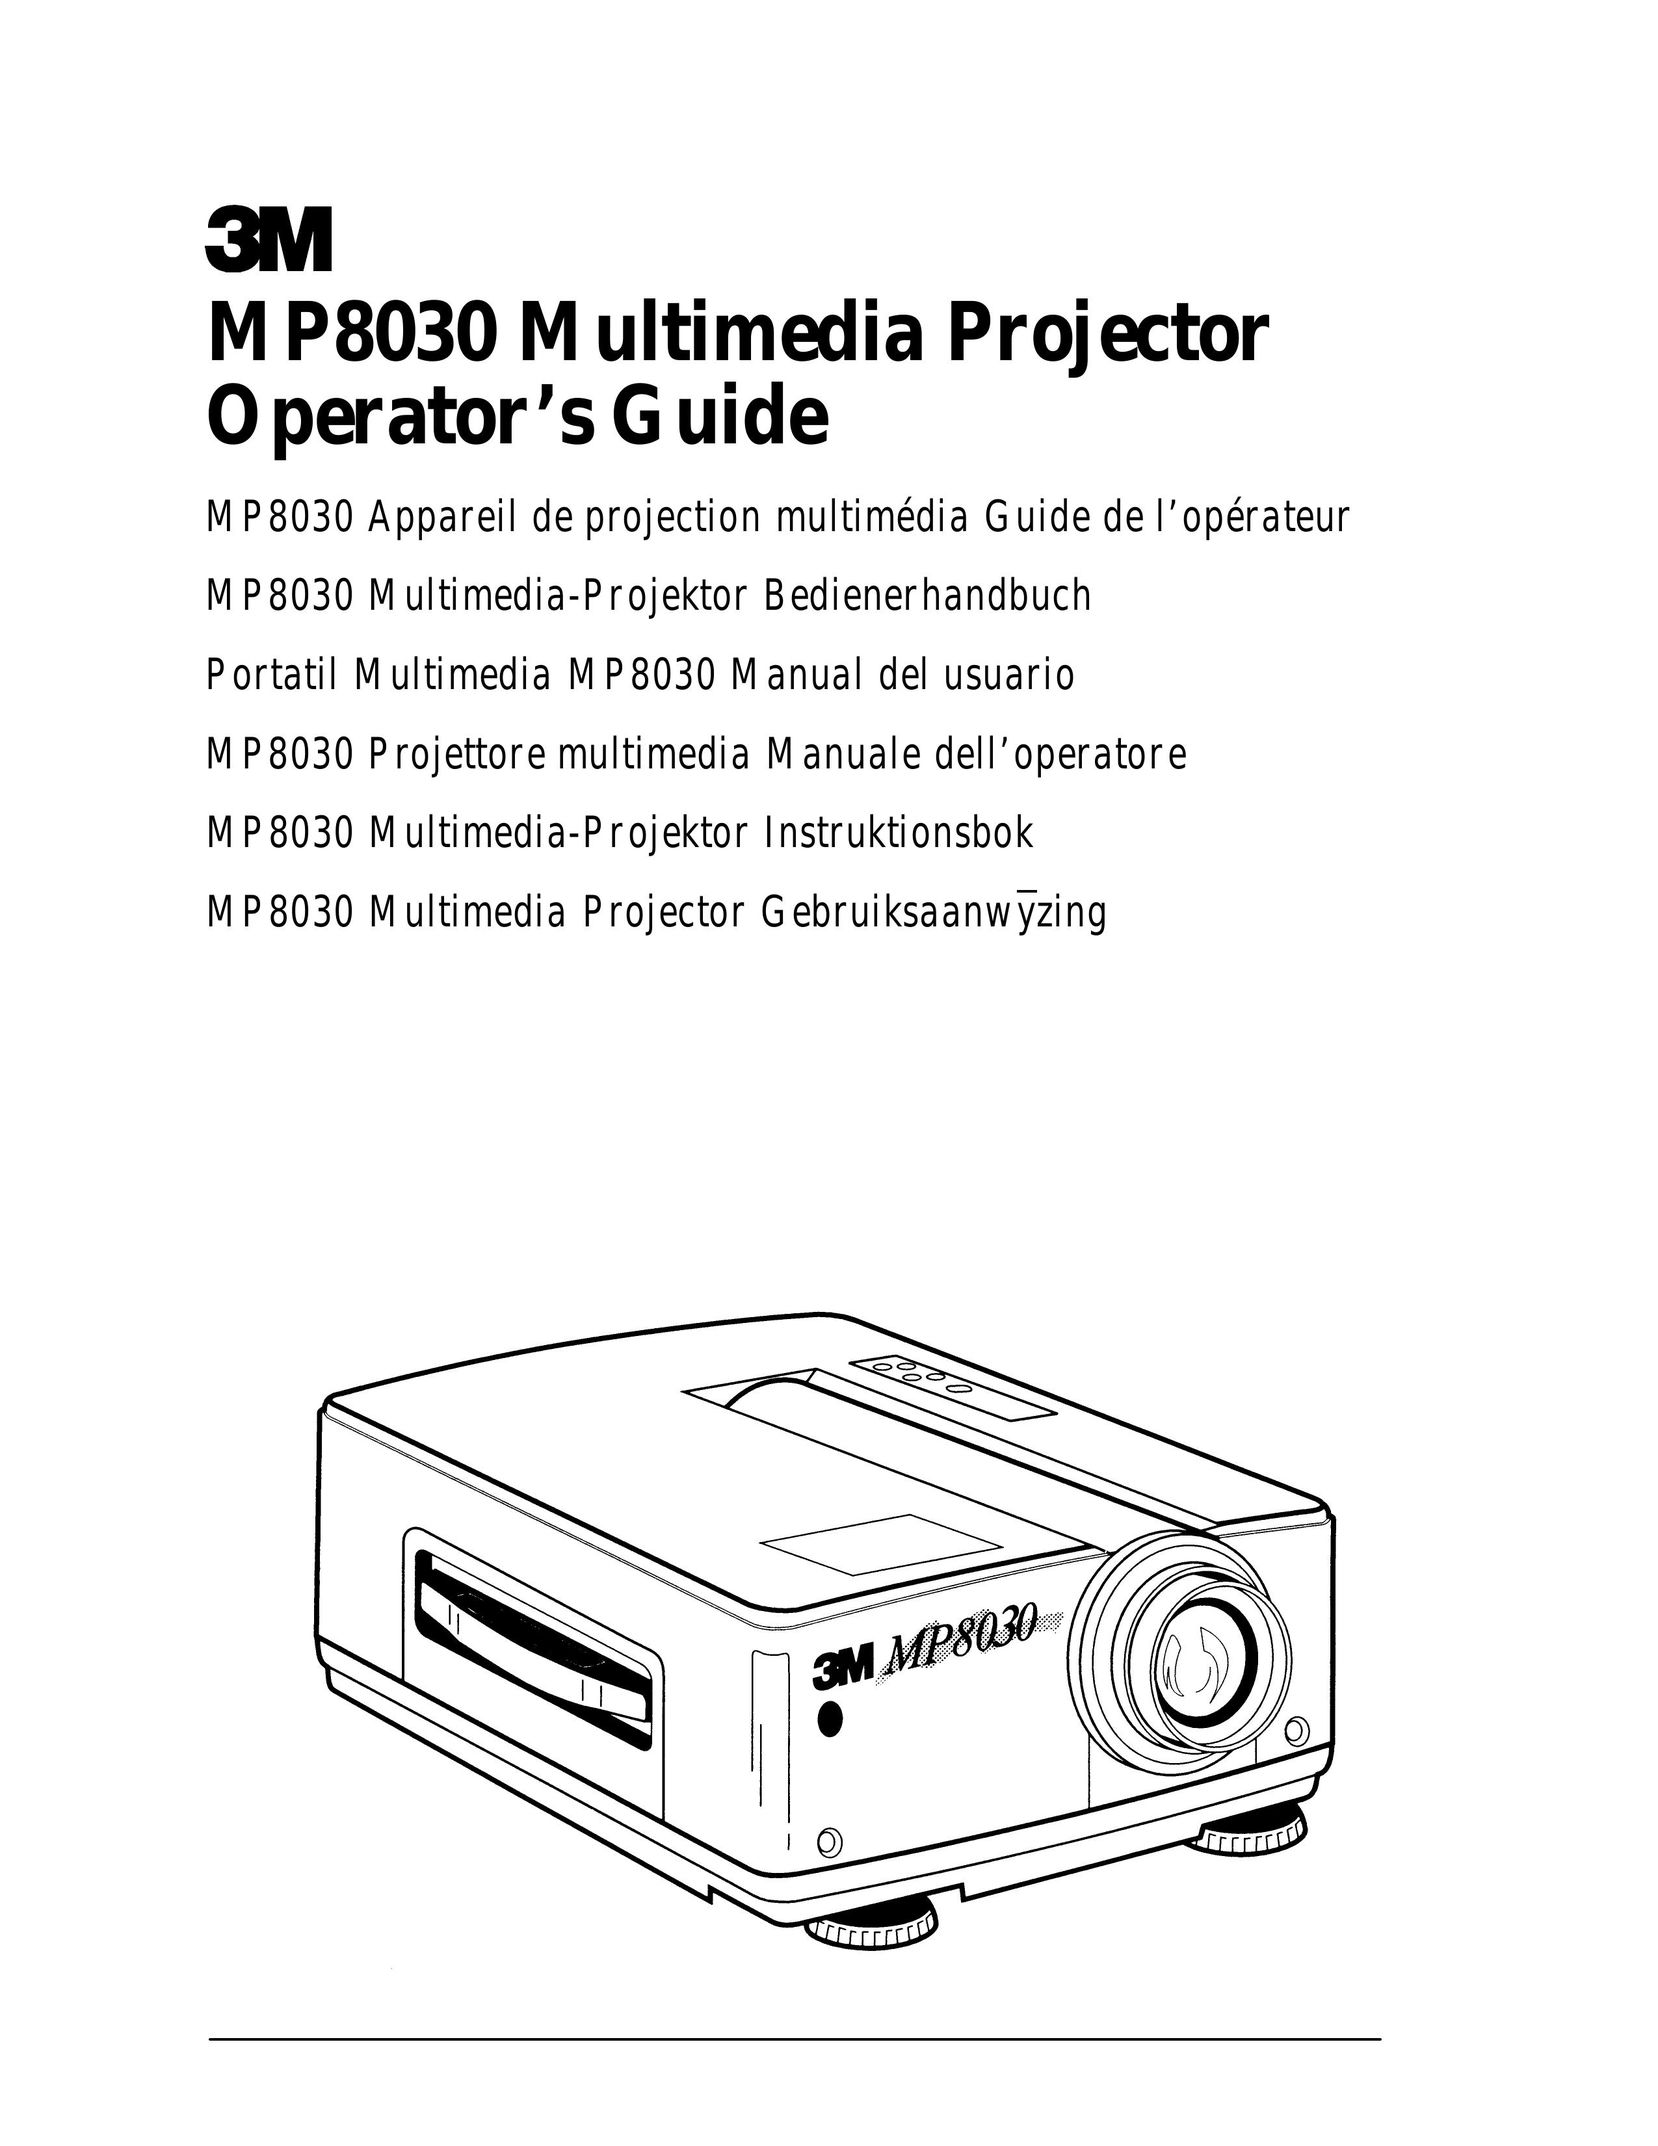 3M MP8030 CRT Television User Manual